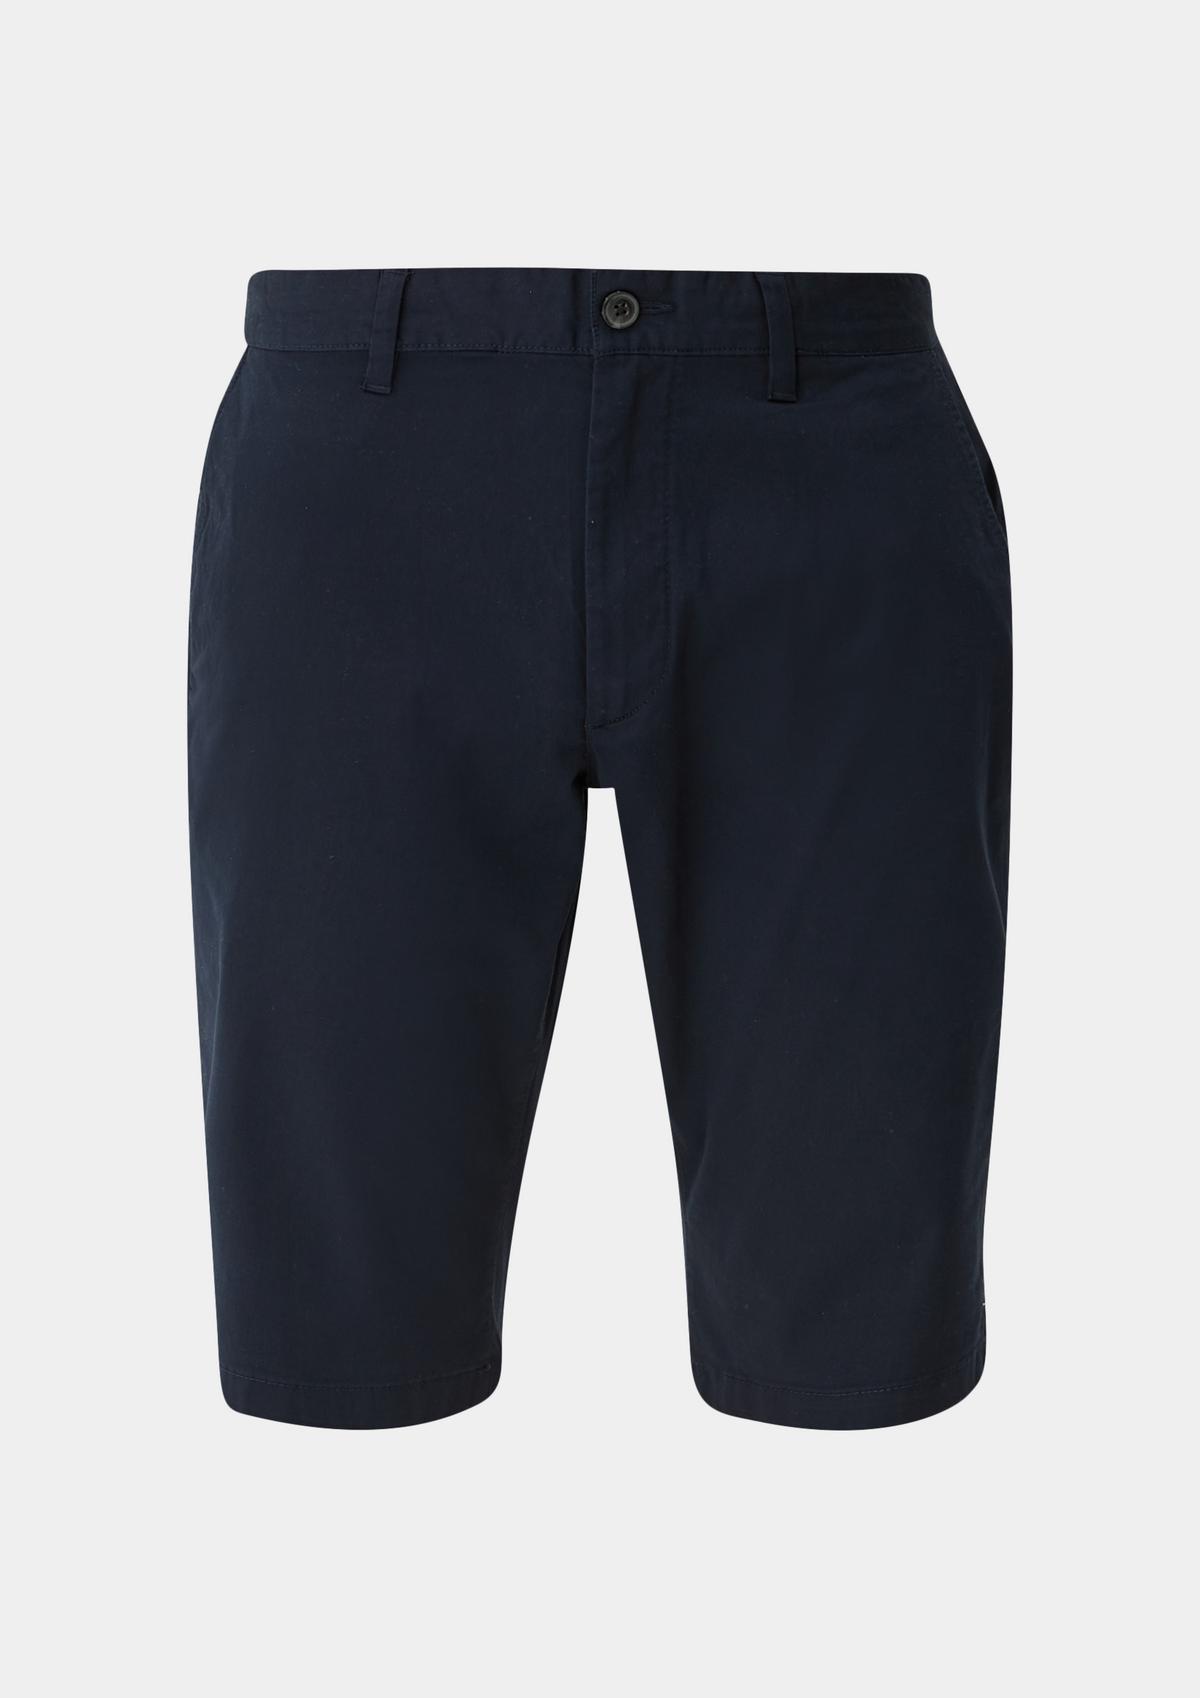 chino fit: - Bermuda navy Slim shorts